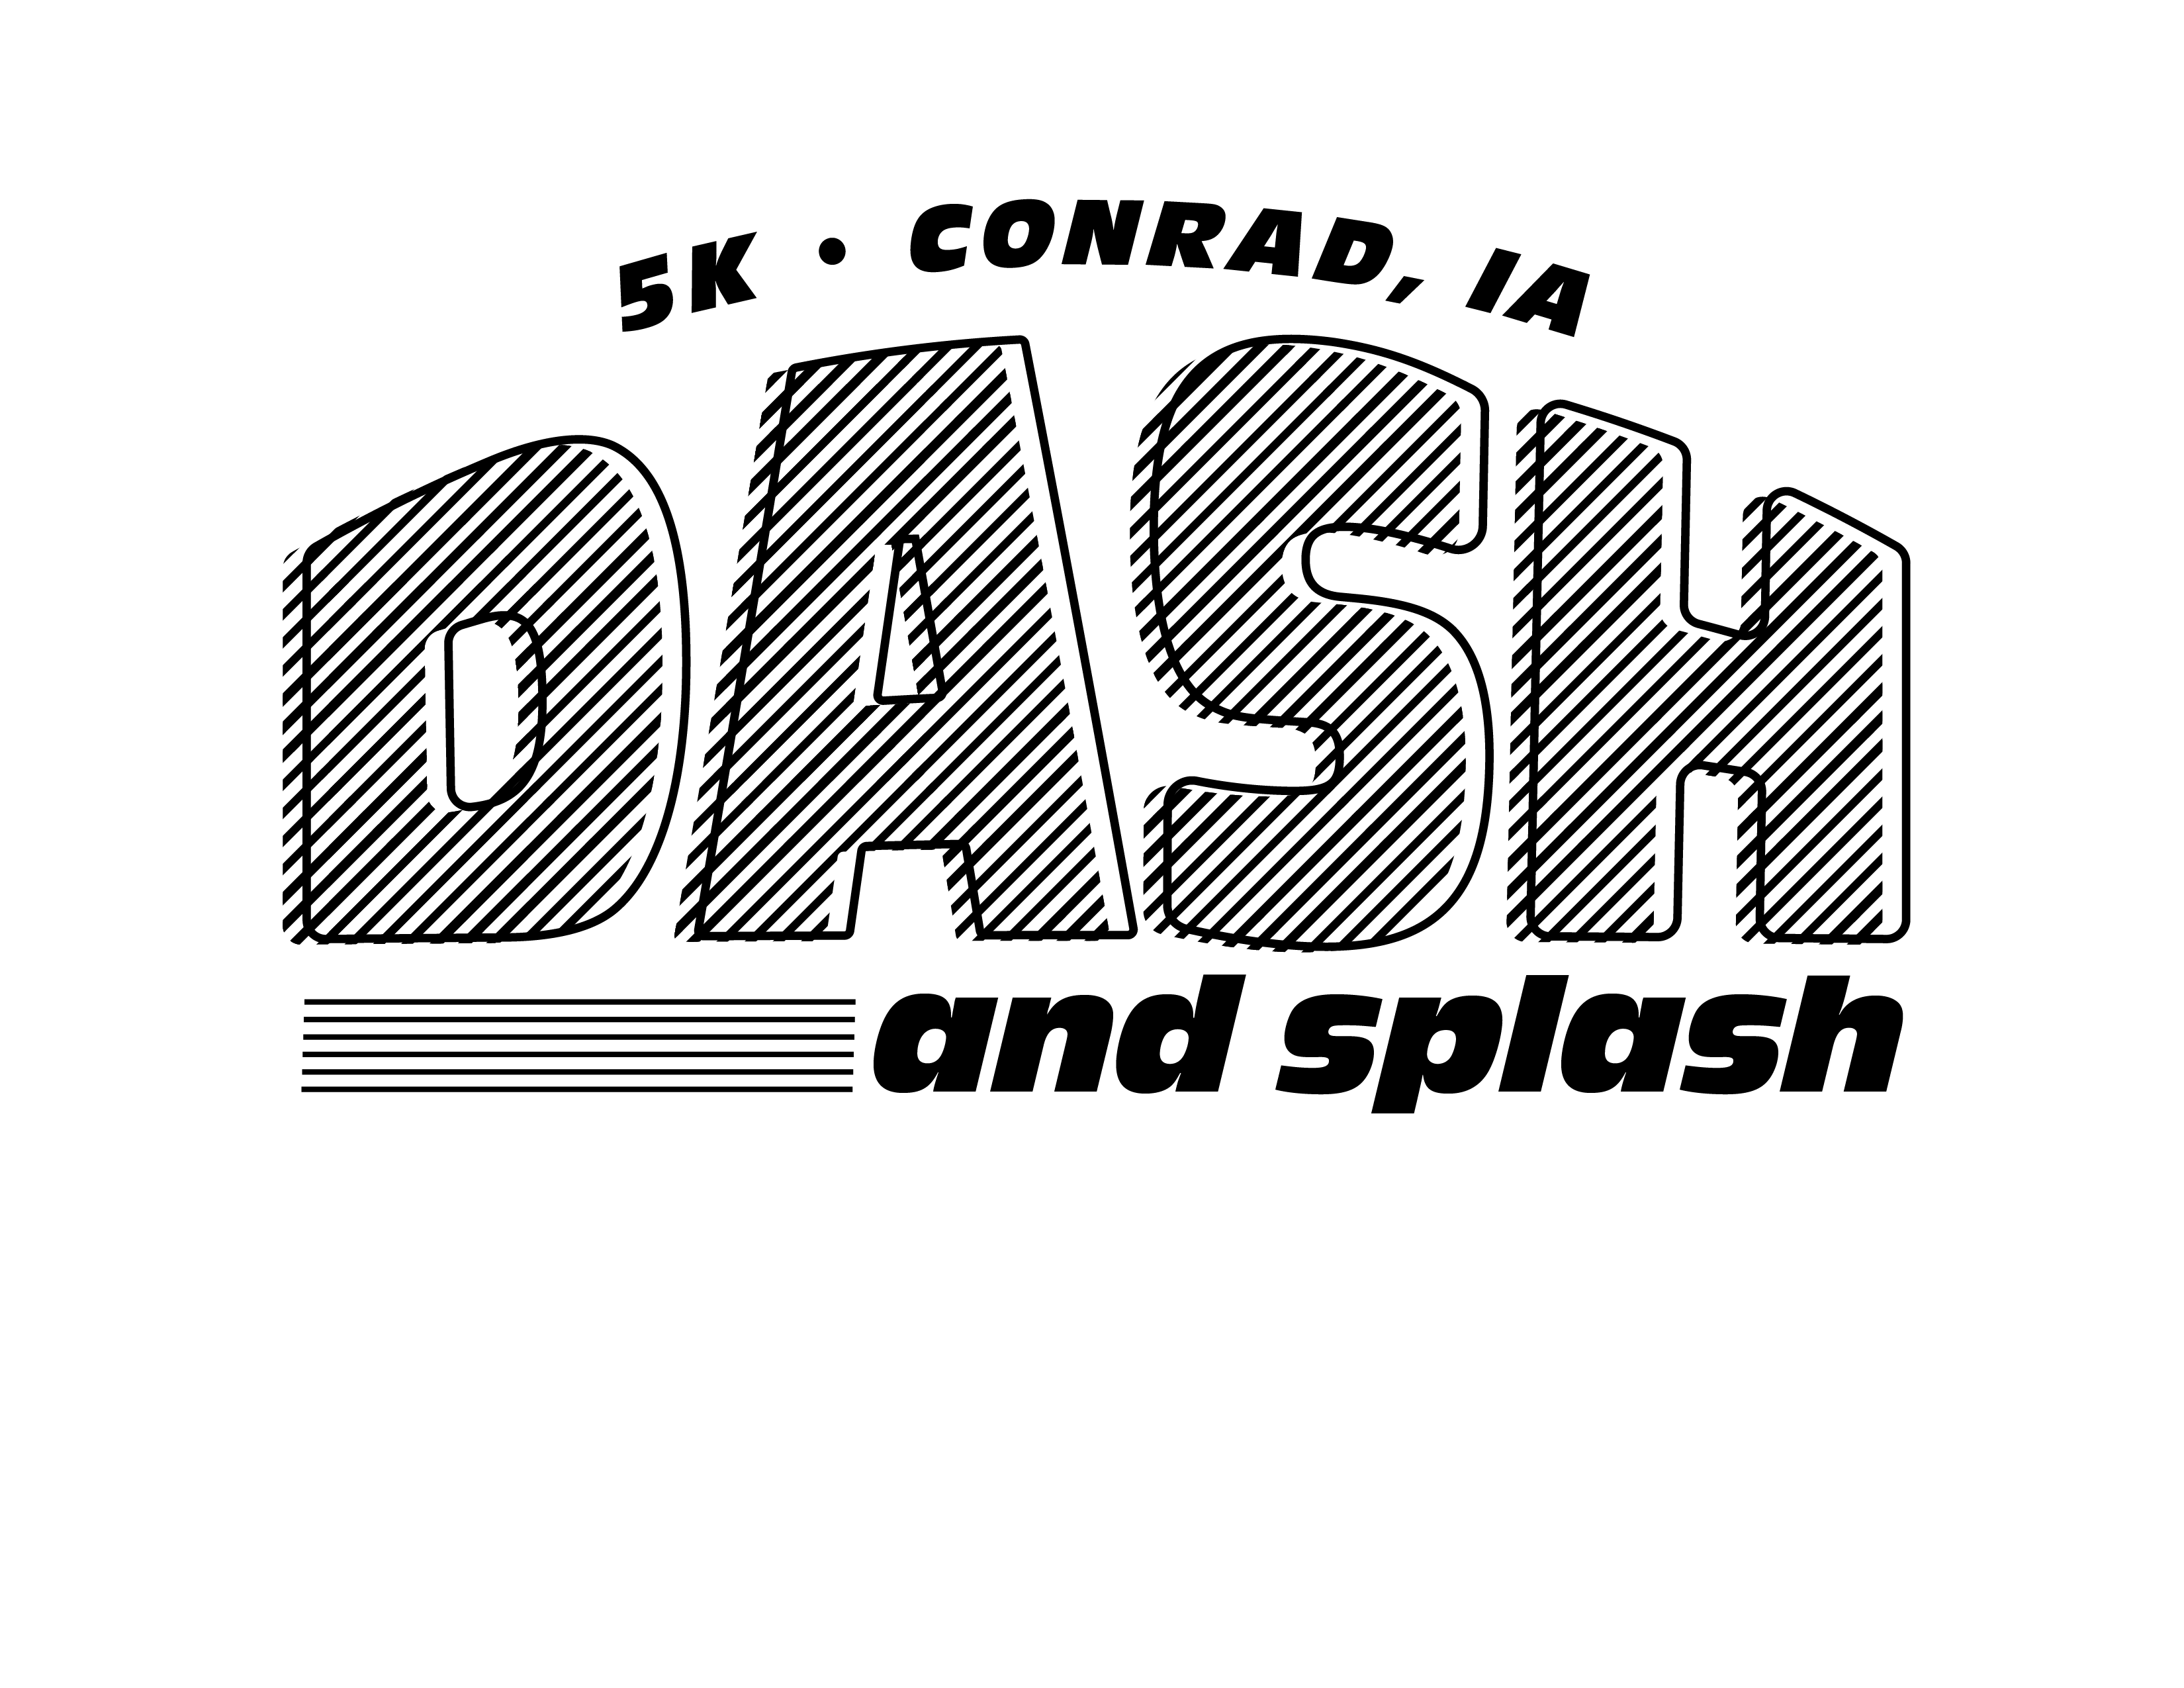 Conrad Dash and Splash logo on RaceRaves